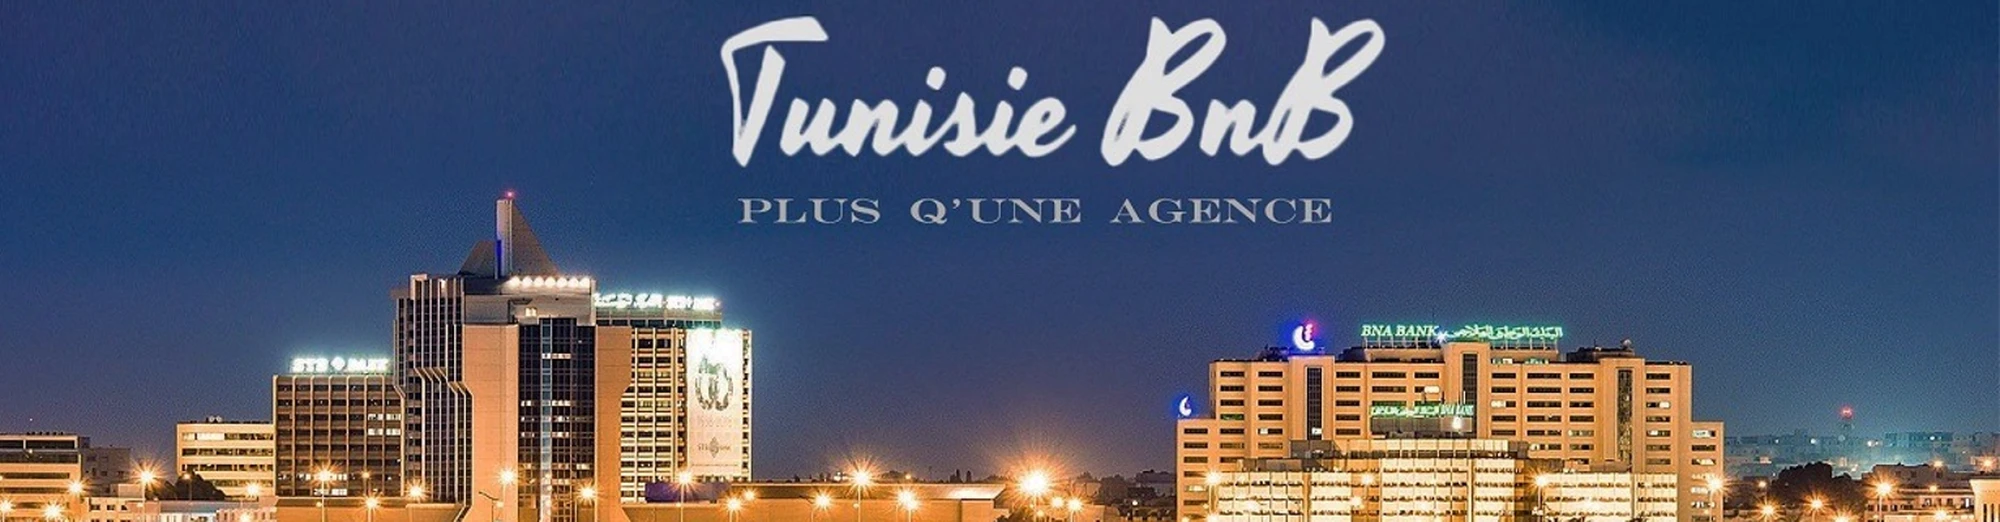 tayara shop cover of Tunisie BnB